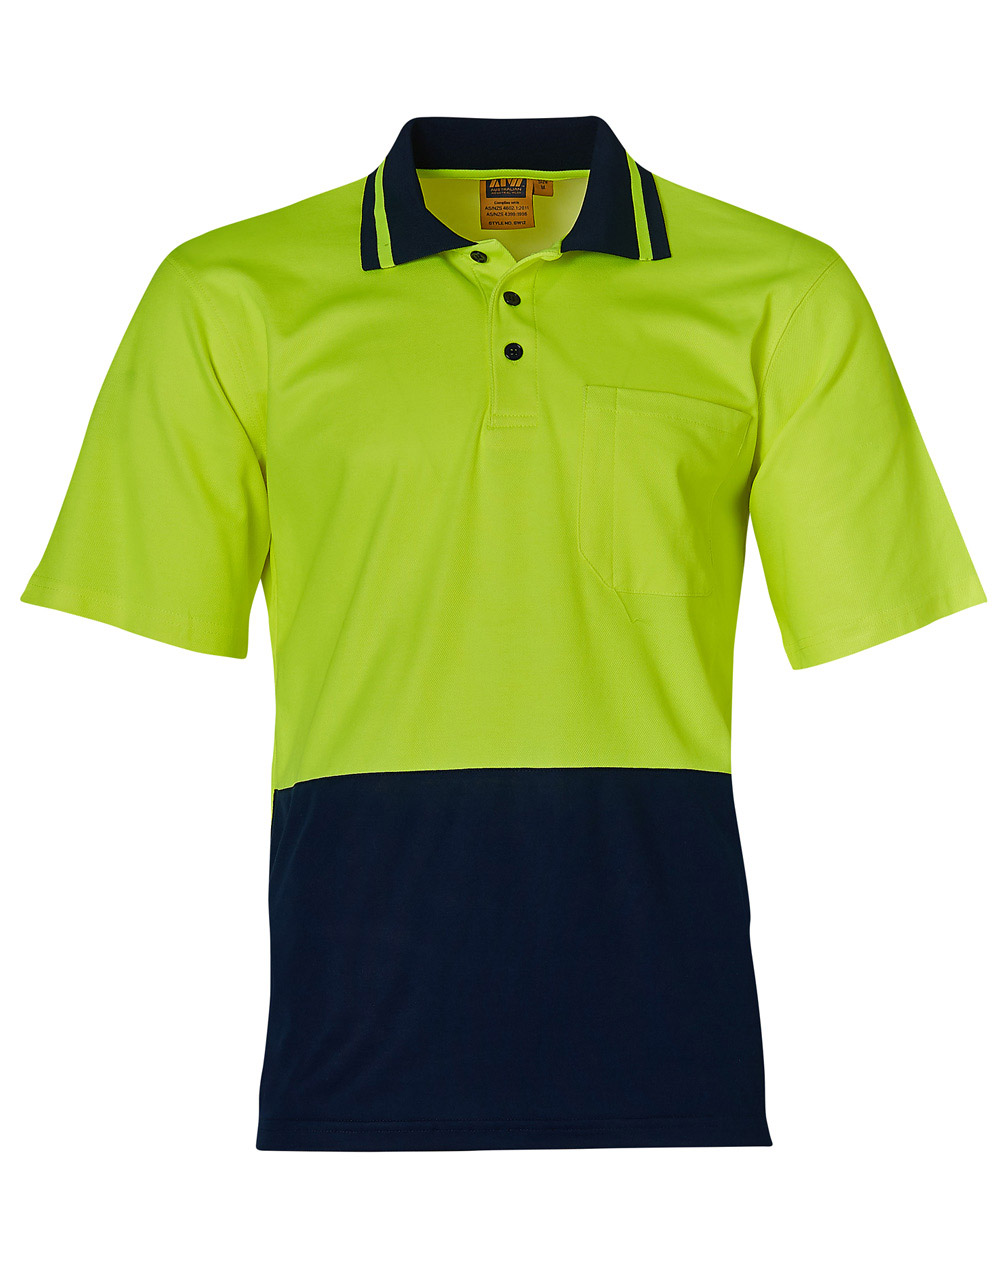 Custom Made (Fluoro Orange Navy) Safety Short Sleeve Polo Shirts Online Perth Australia